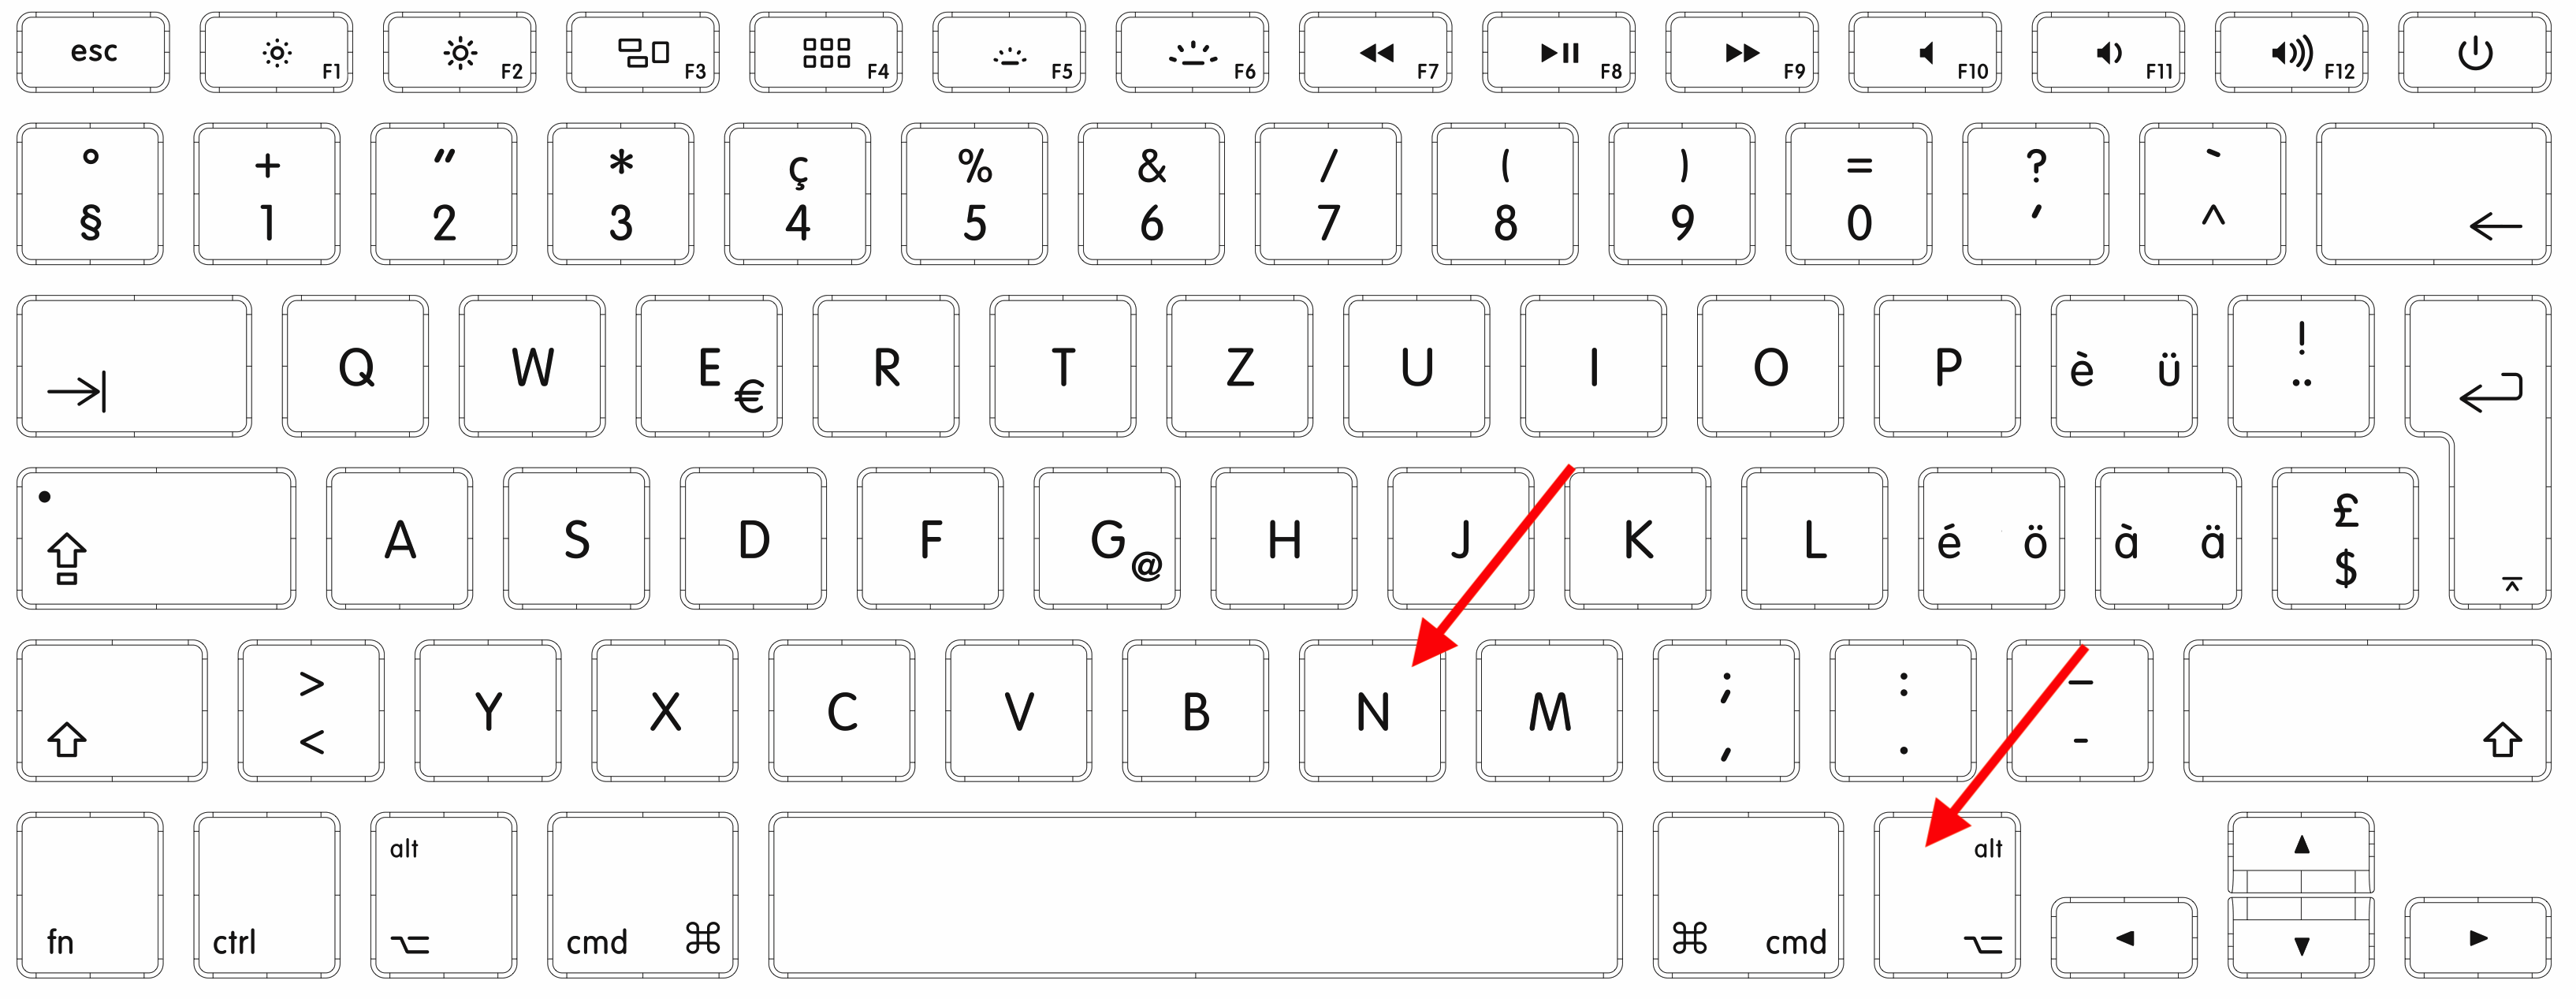 mac keyboard symbols abbreviation